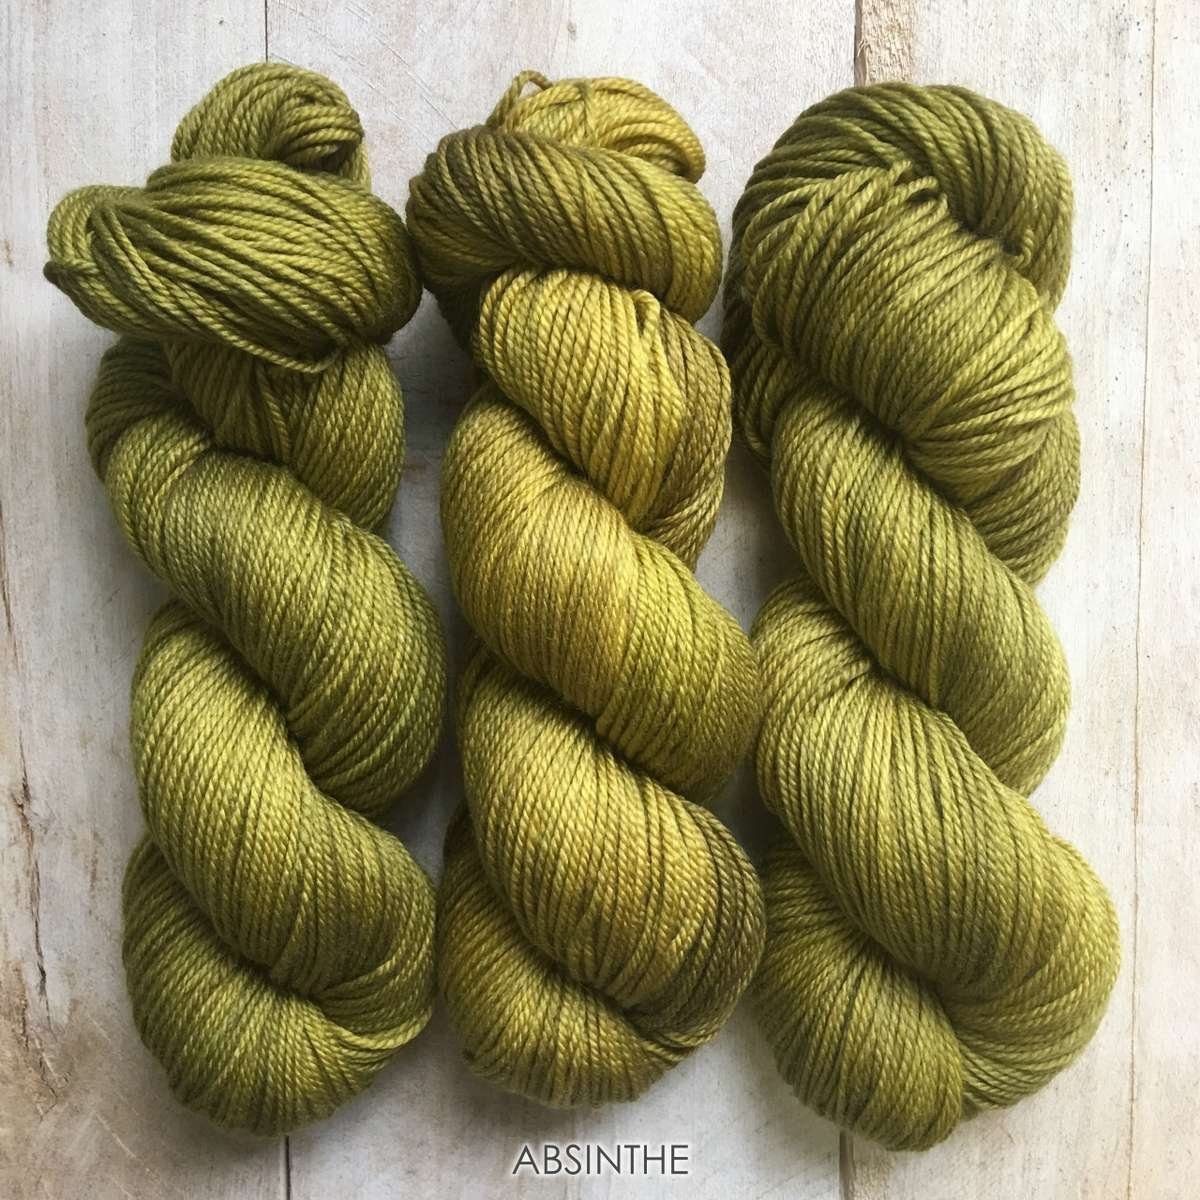 Hand-dyed yarn Louise Robert Absinthe